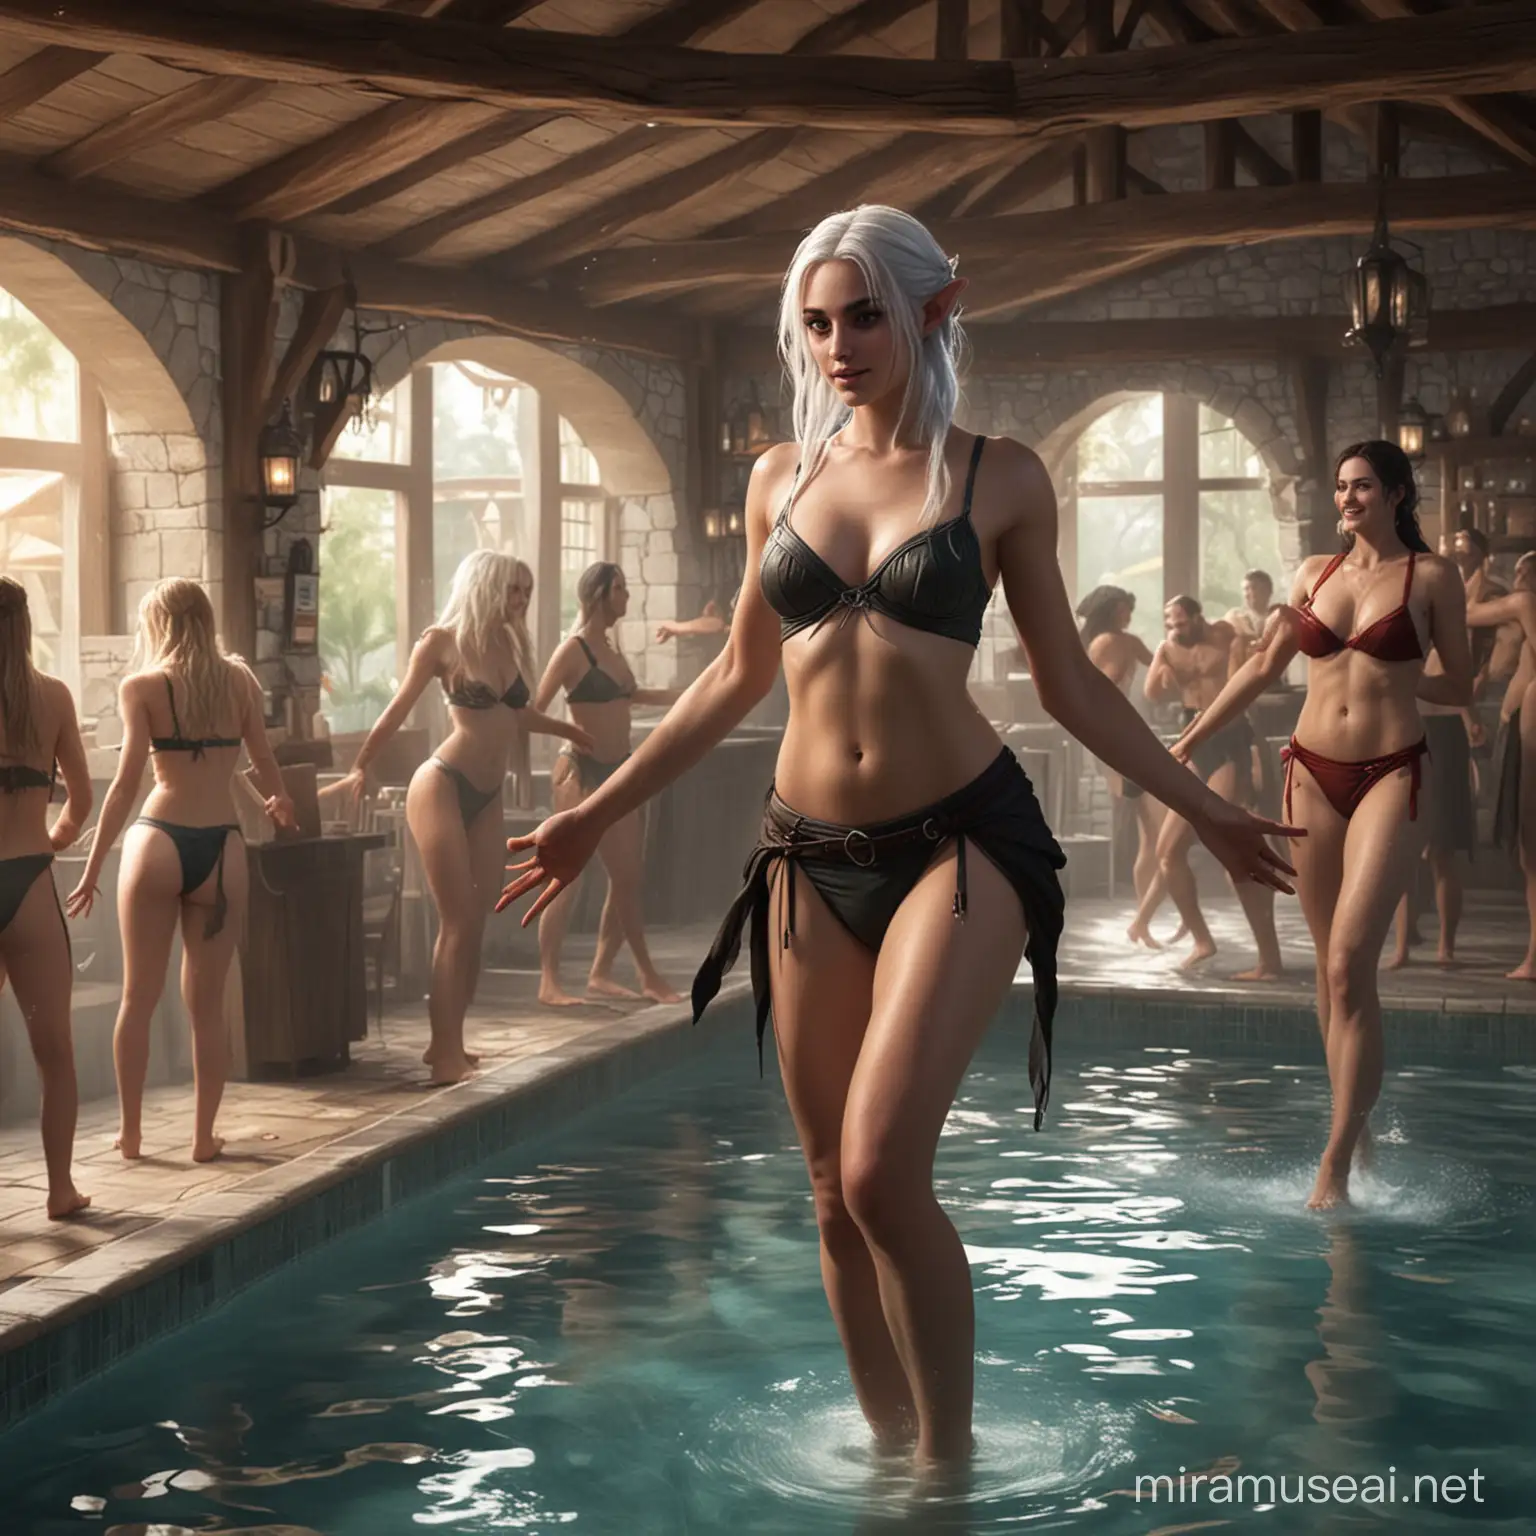 Fantasy Spa Drow HalfElf and Human Women Dancing Poolside